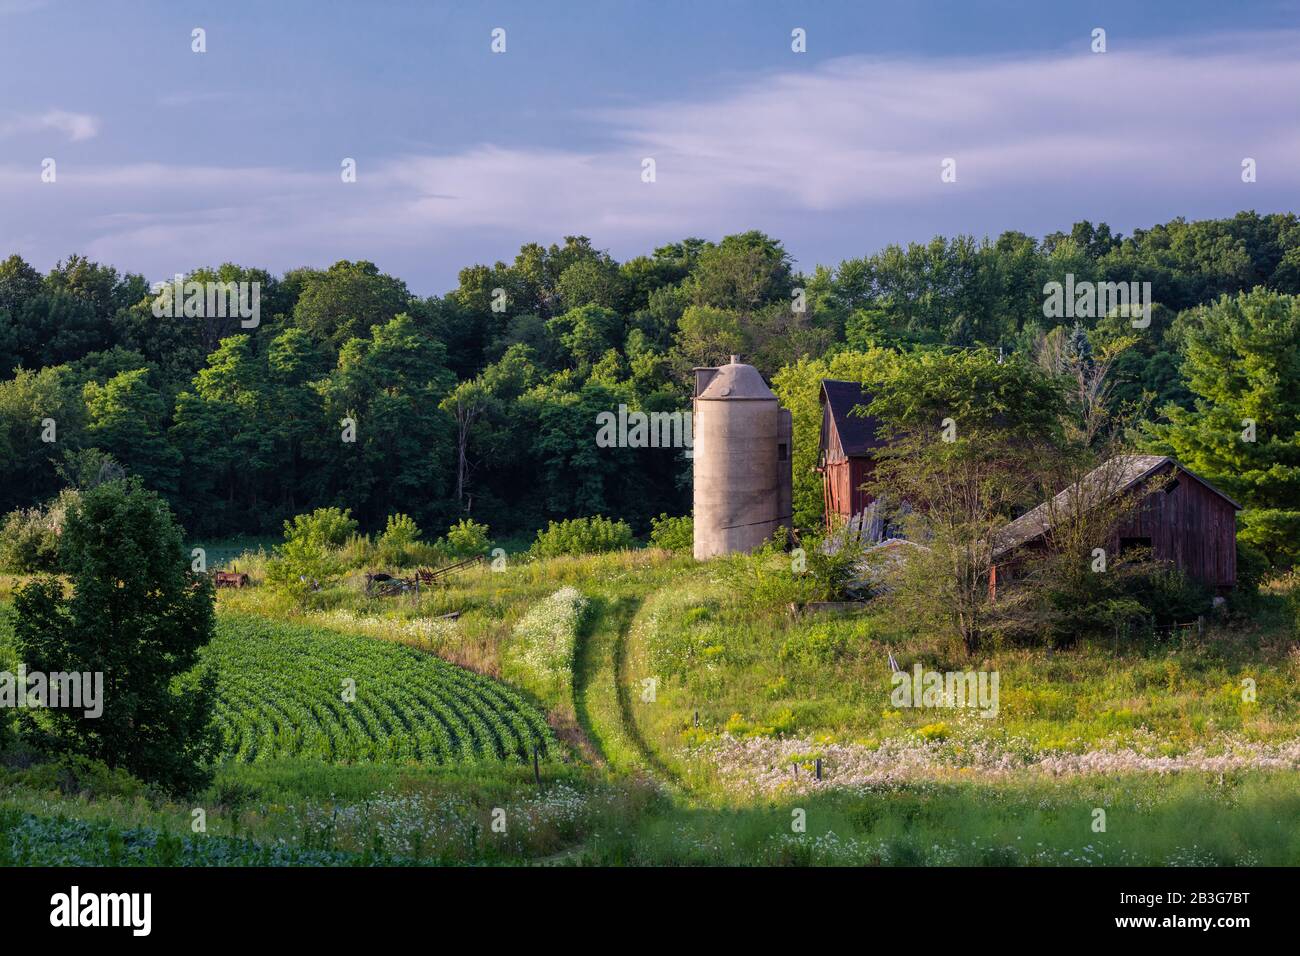 Barn, silo and field of crops on a farm, Ashippun, Dodge County, Wisconsin Stock Photo